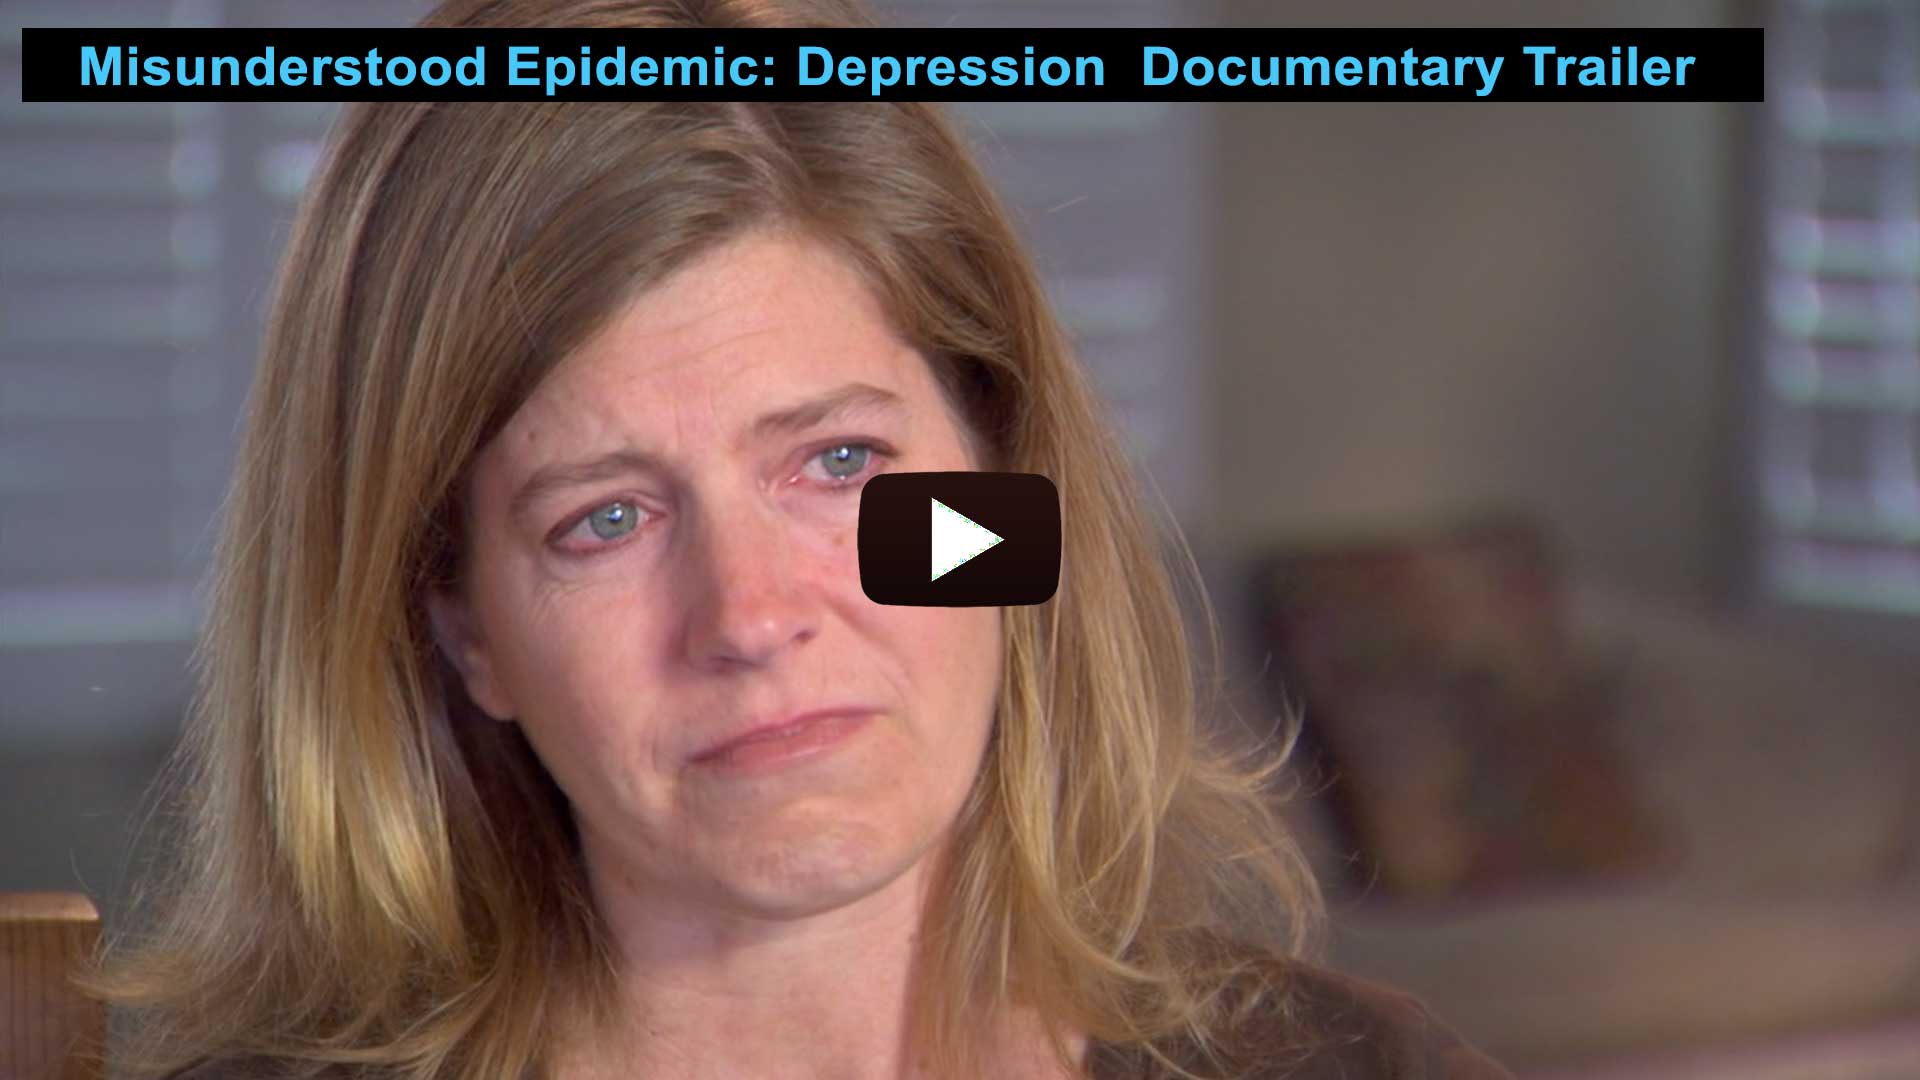 Watch The trailer of Misunderstood Epidemic: Depression